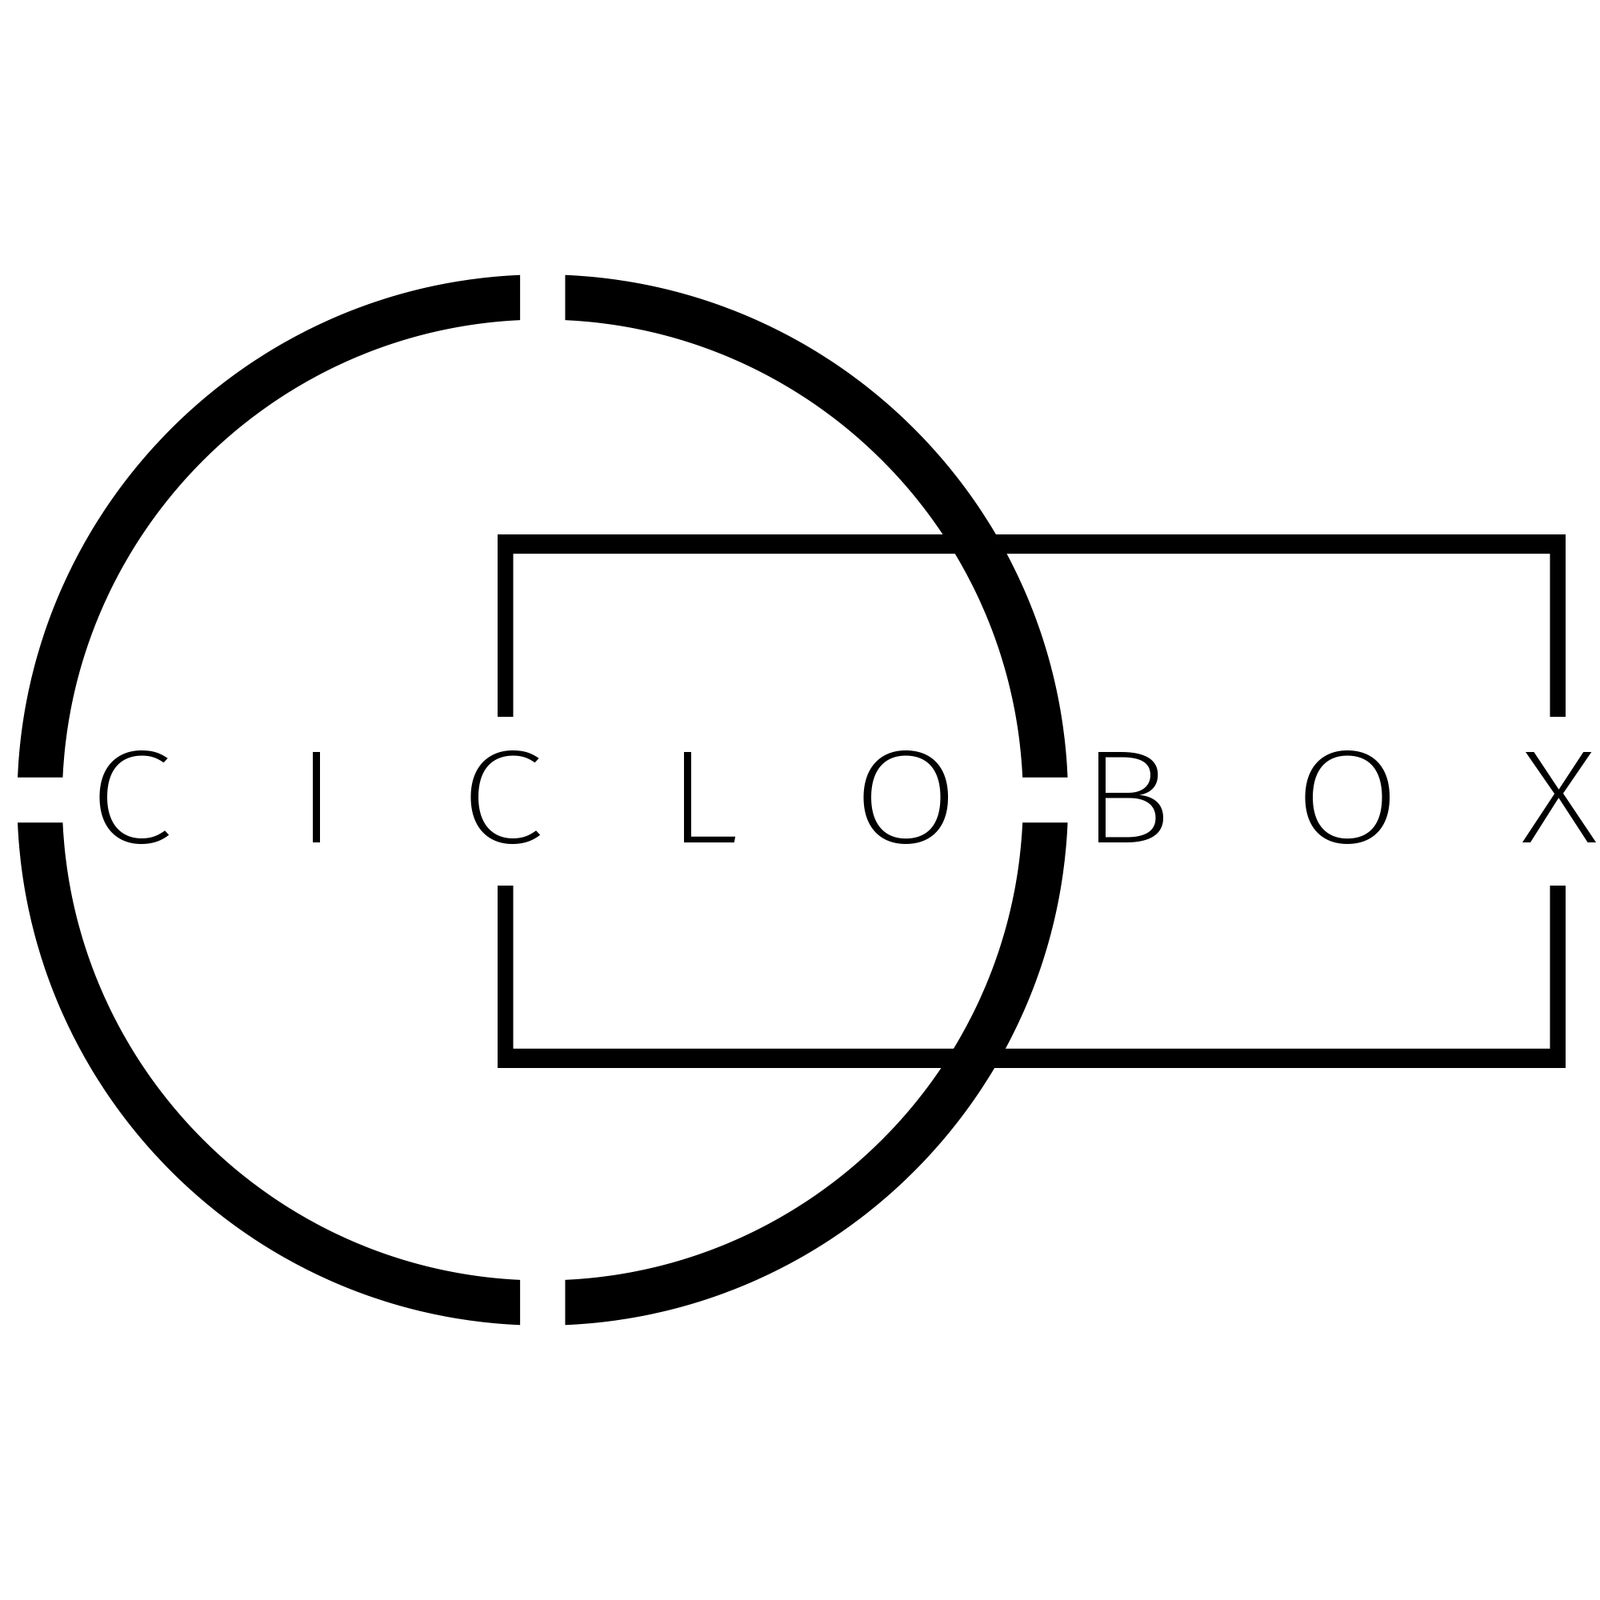 CicloBox